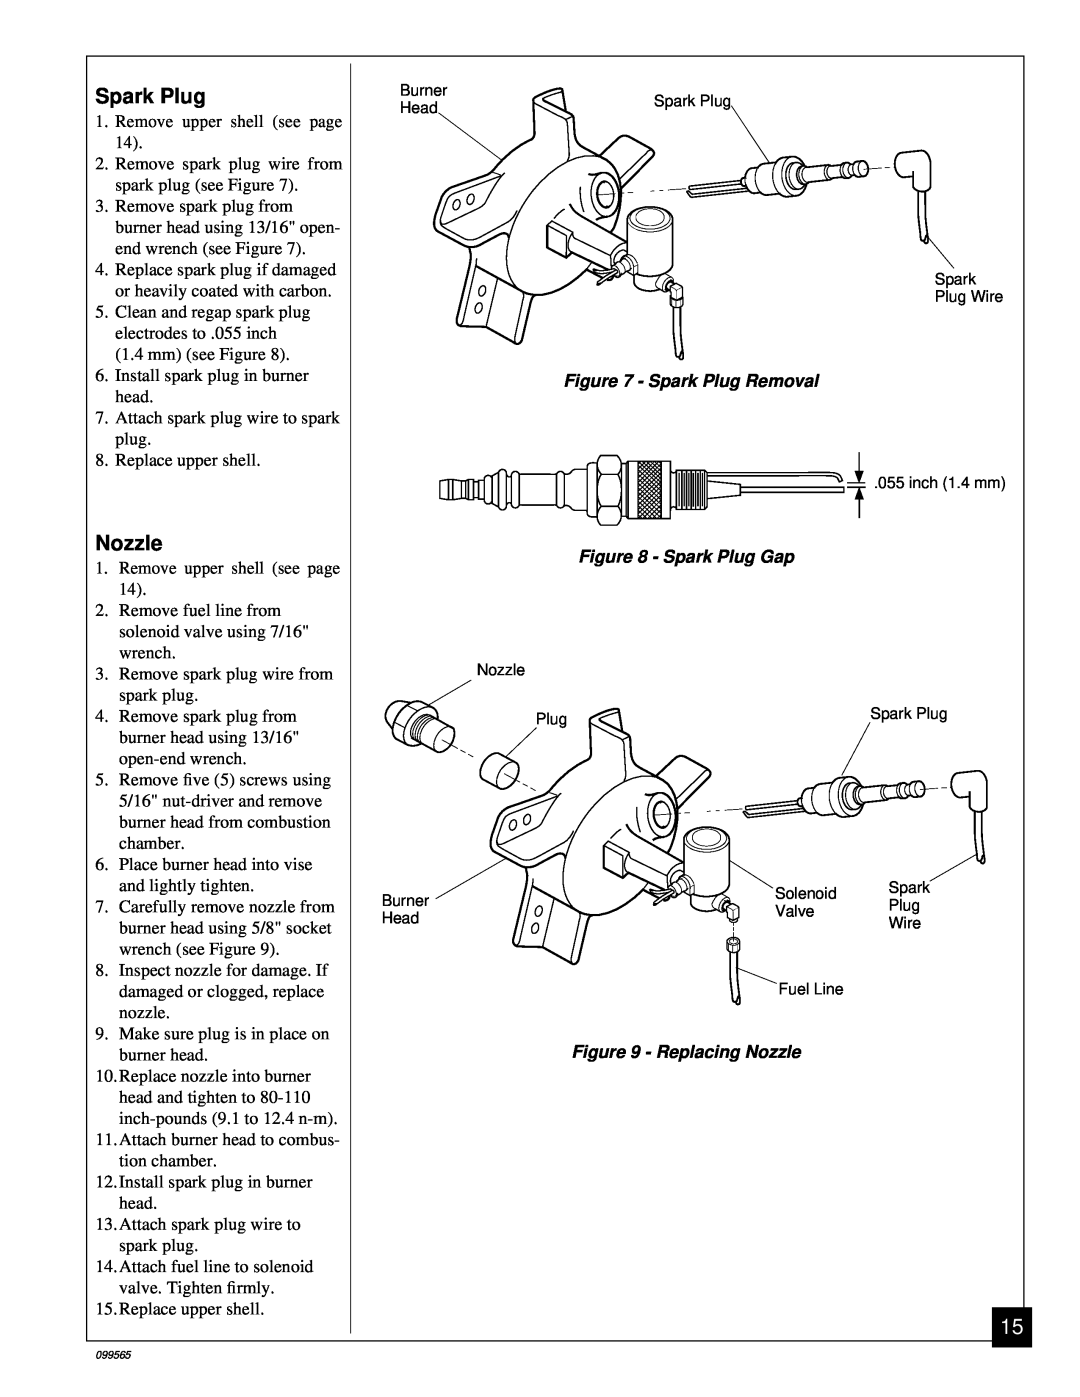 Master Lock B350EAI owner manual Spark Plug Removal, Spark Plug Gap, Replacing Nozzle 